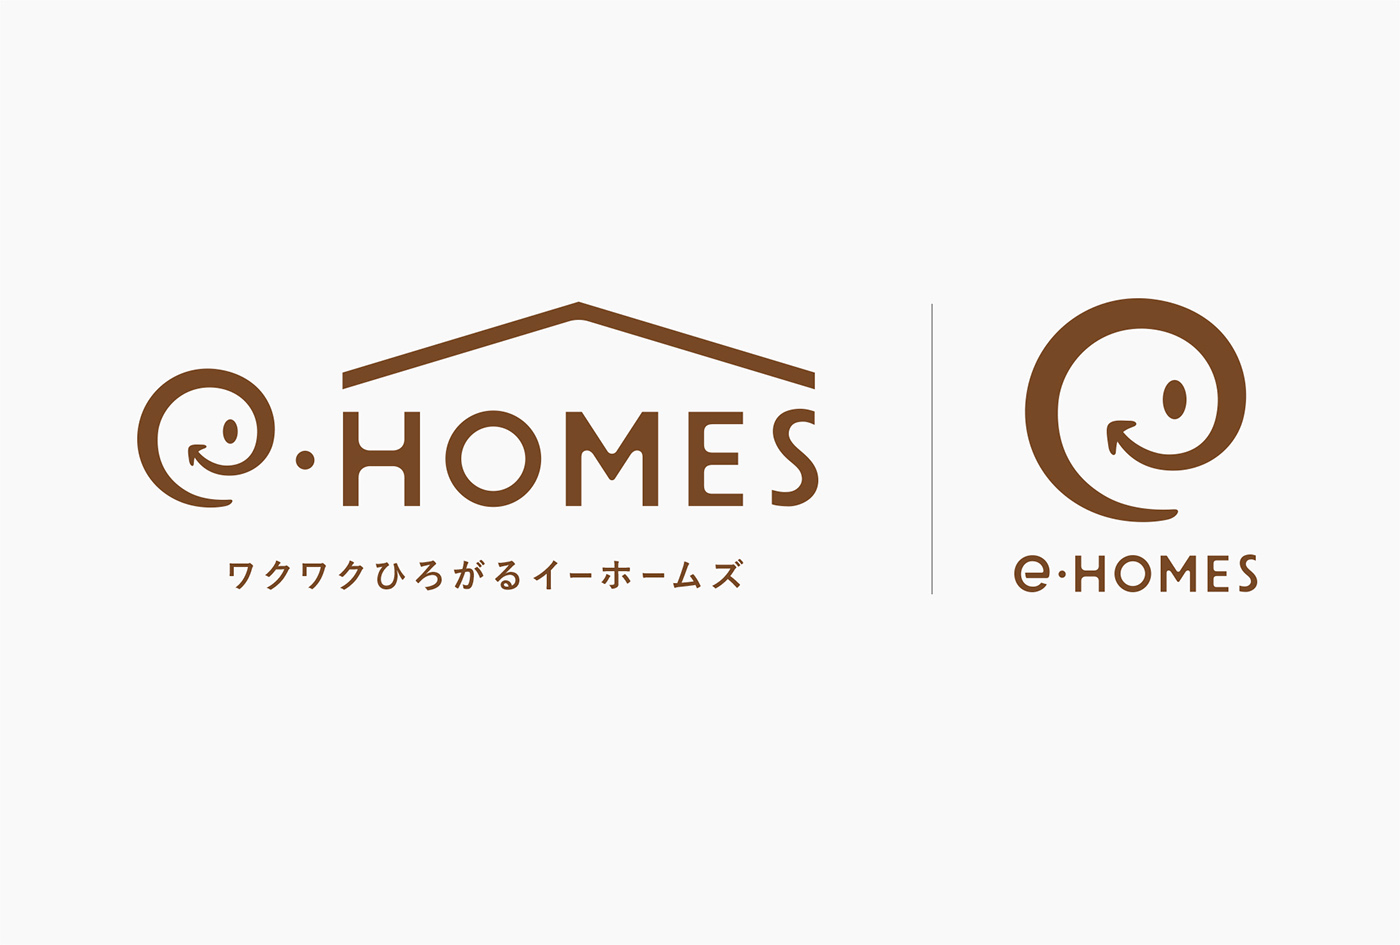 Adobe Portfolio 建築 service logo construction building block サービスロゴ face logo smile 日本 ロゴ 湘南 住宅